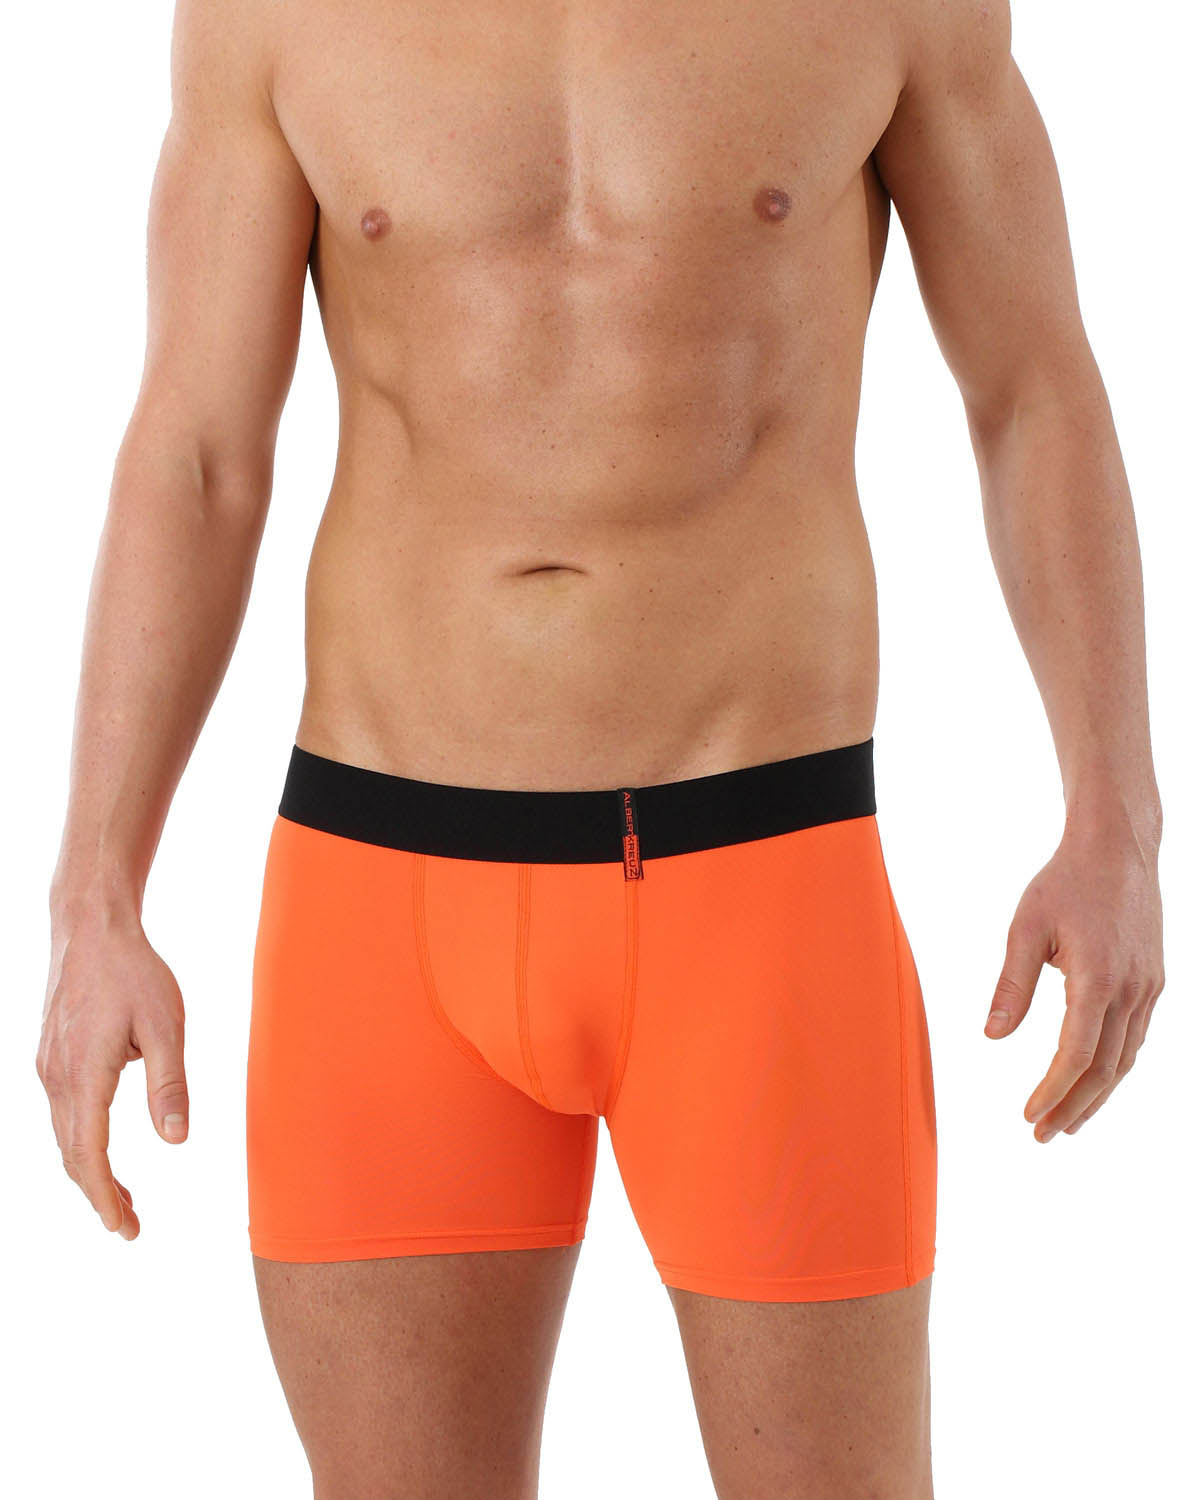 Men's boxers briefs microfiber orange